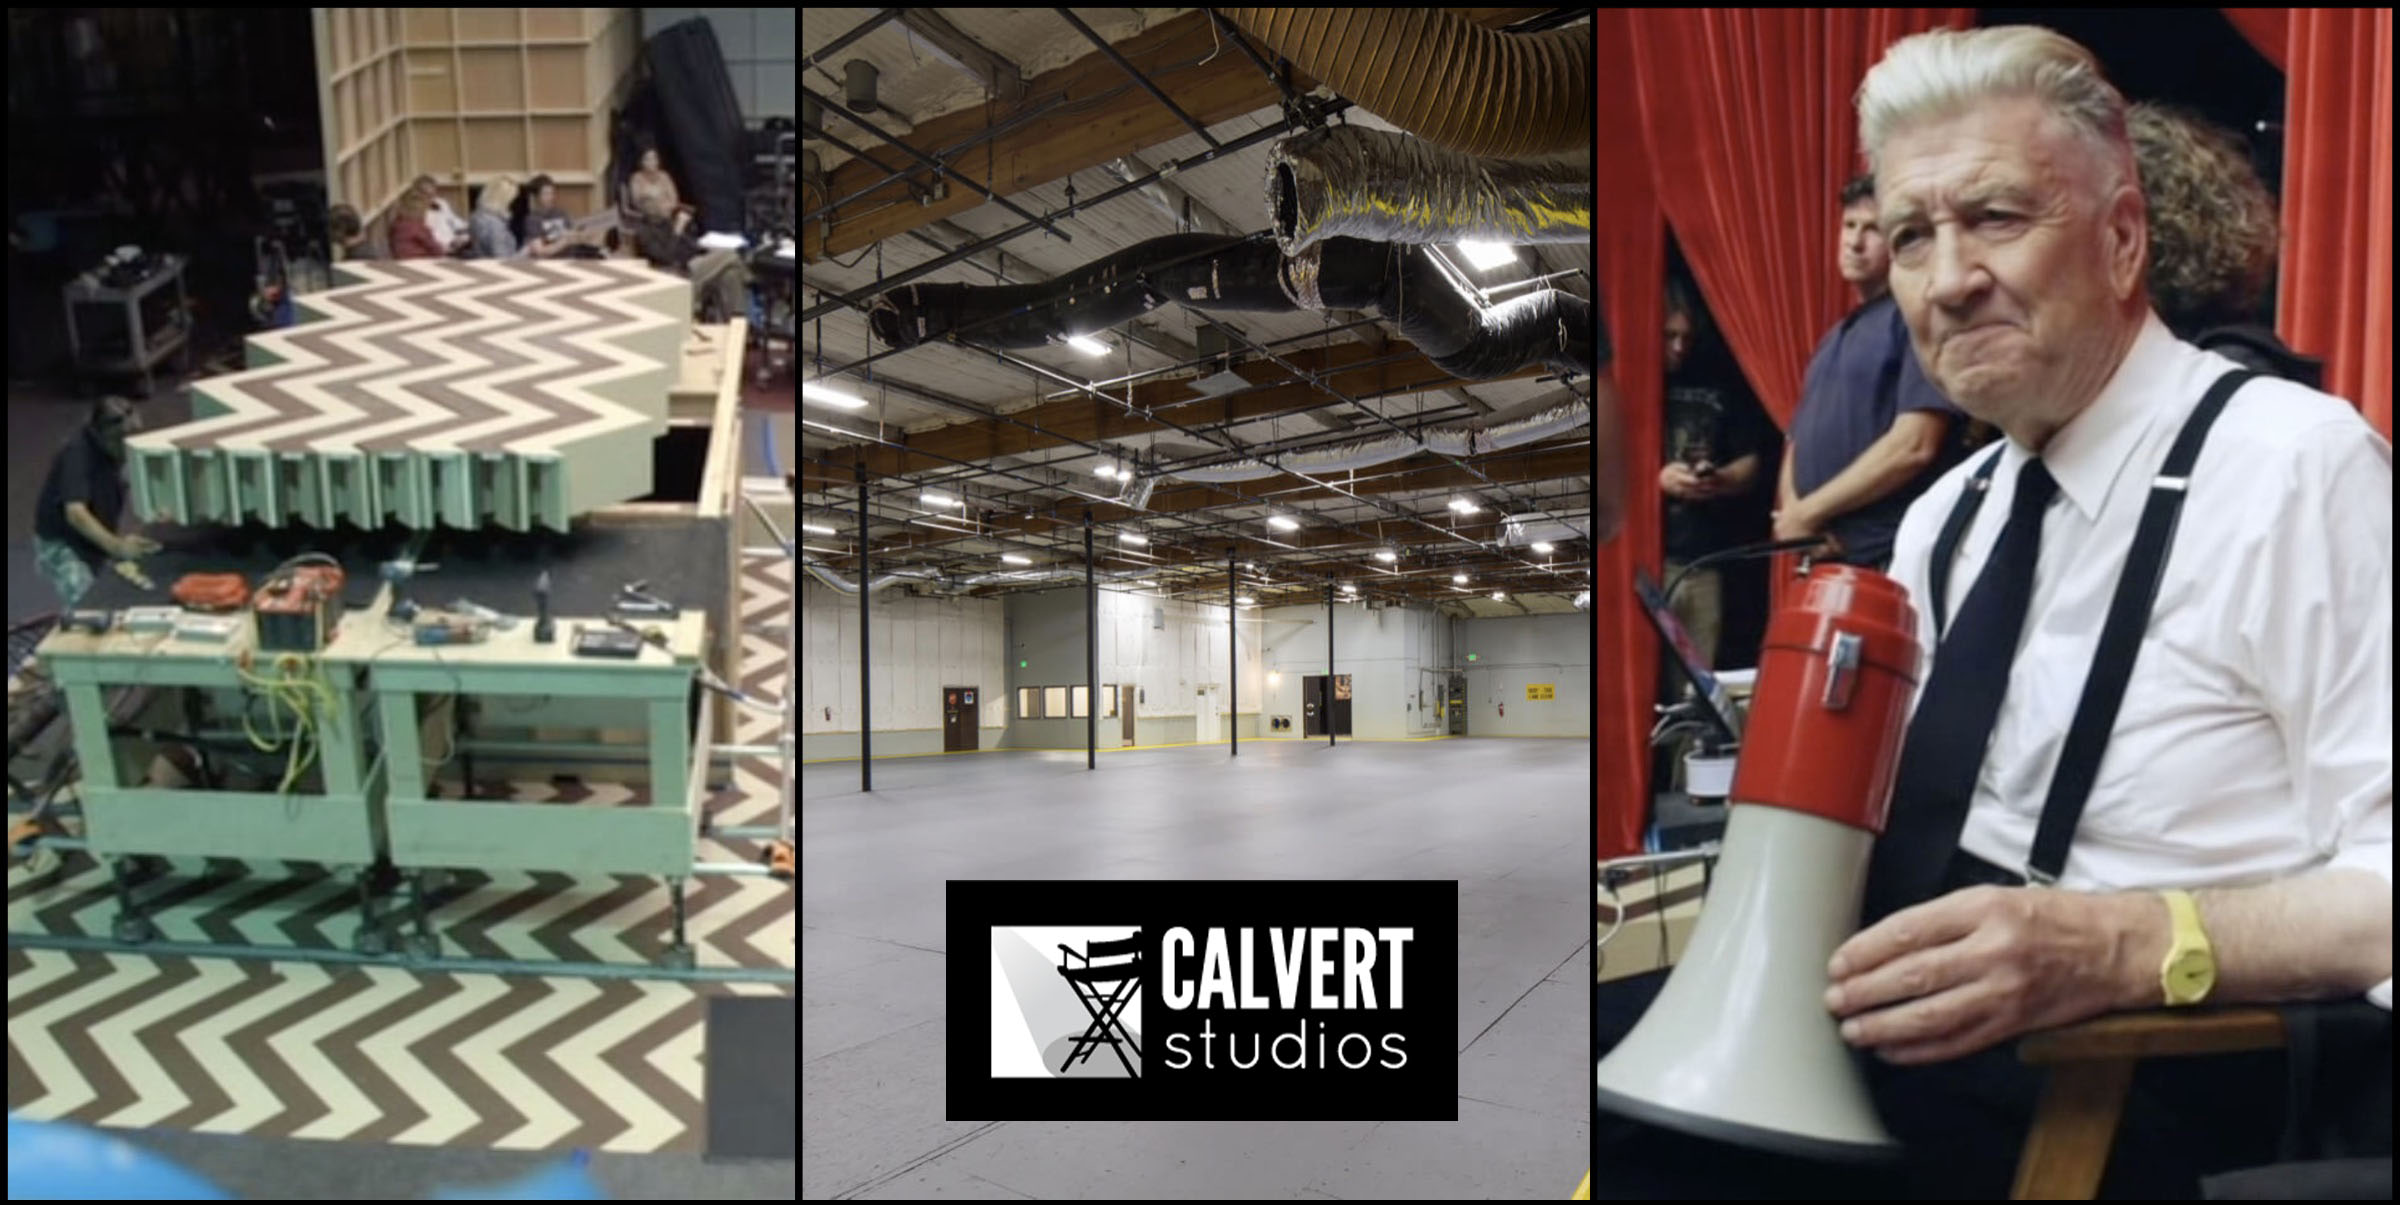 Calvert Studios in Van Nuys, California was home to Twin Peaks Season 3 on Showtime